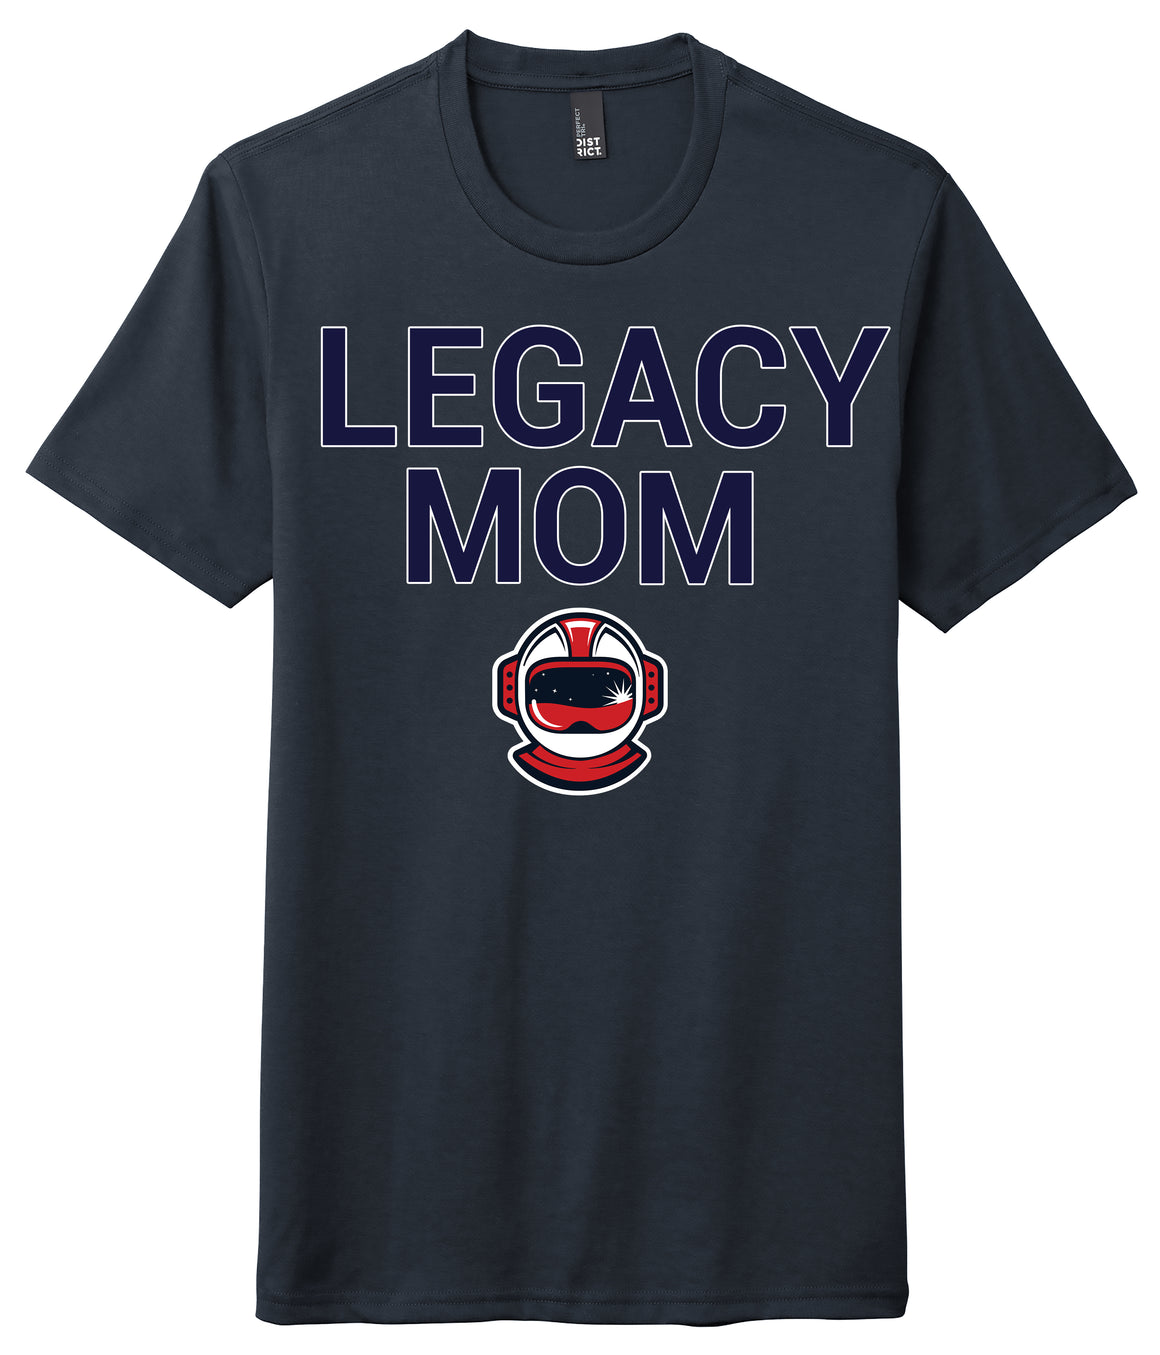 Legacy Online Academy - Mom Shirt